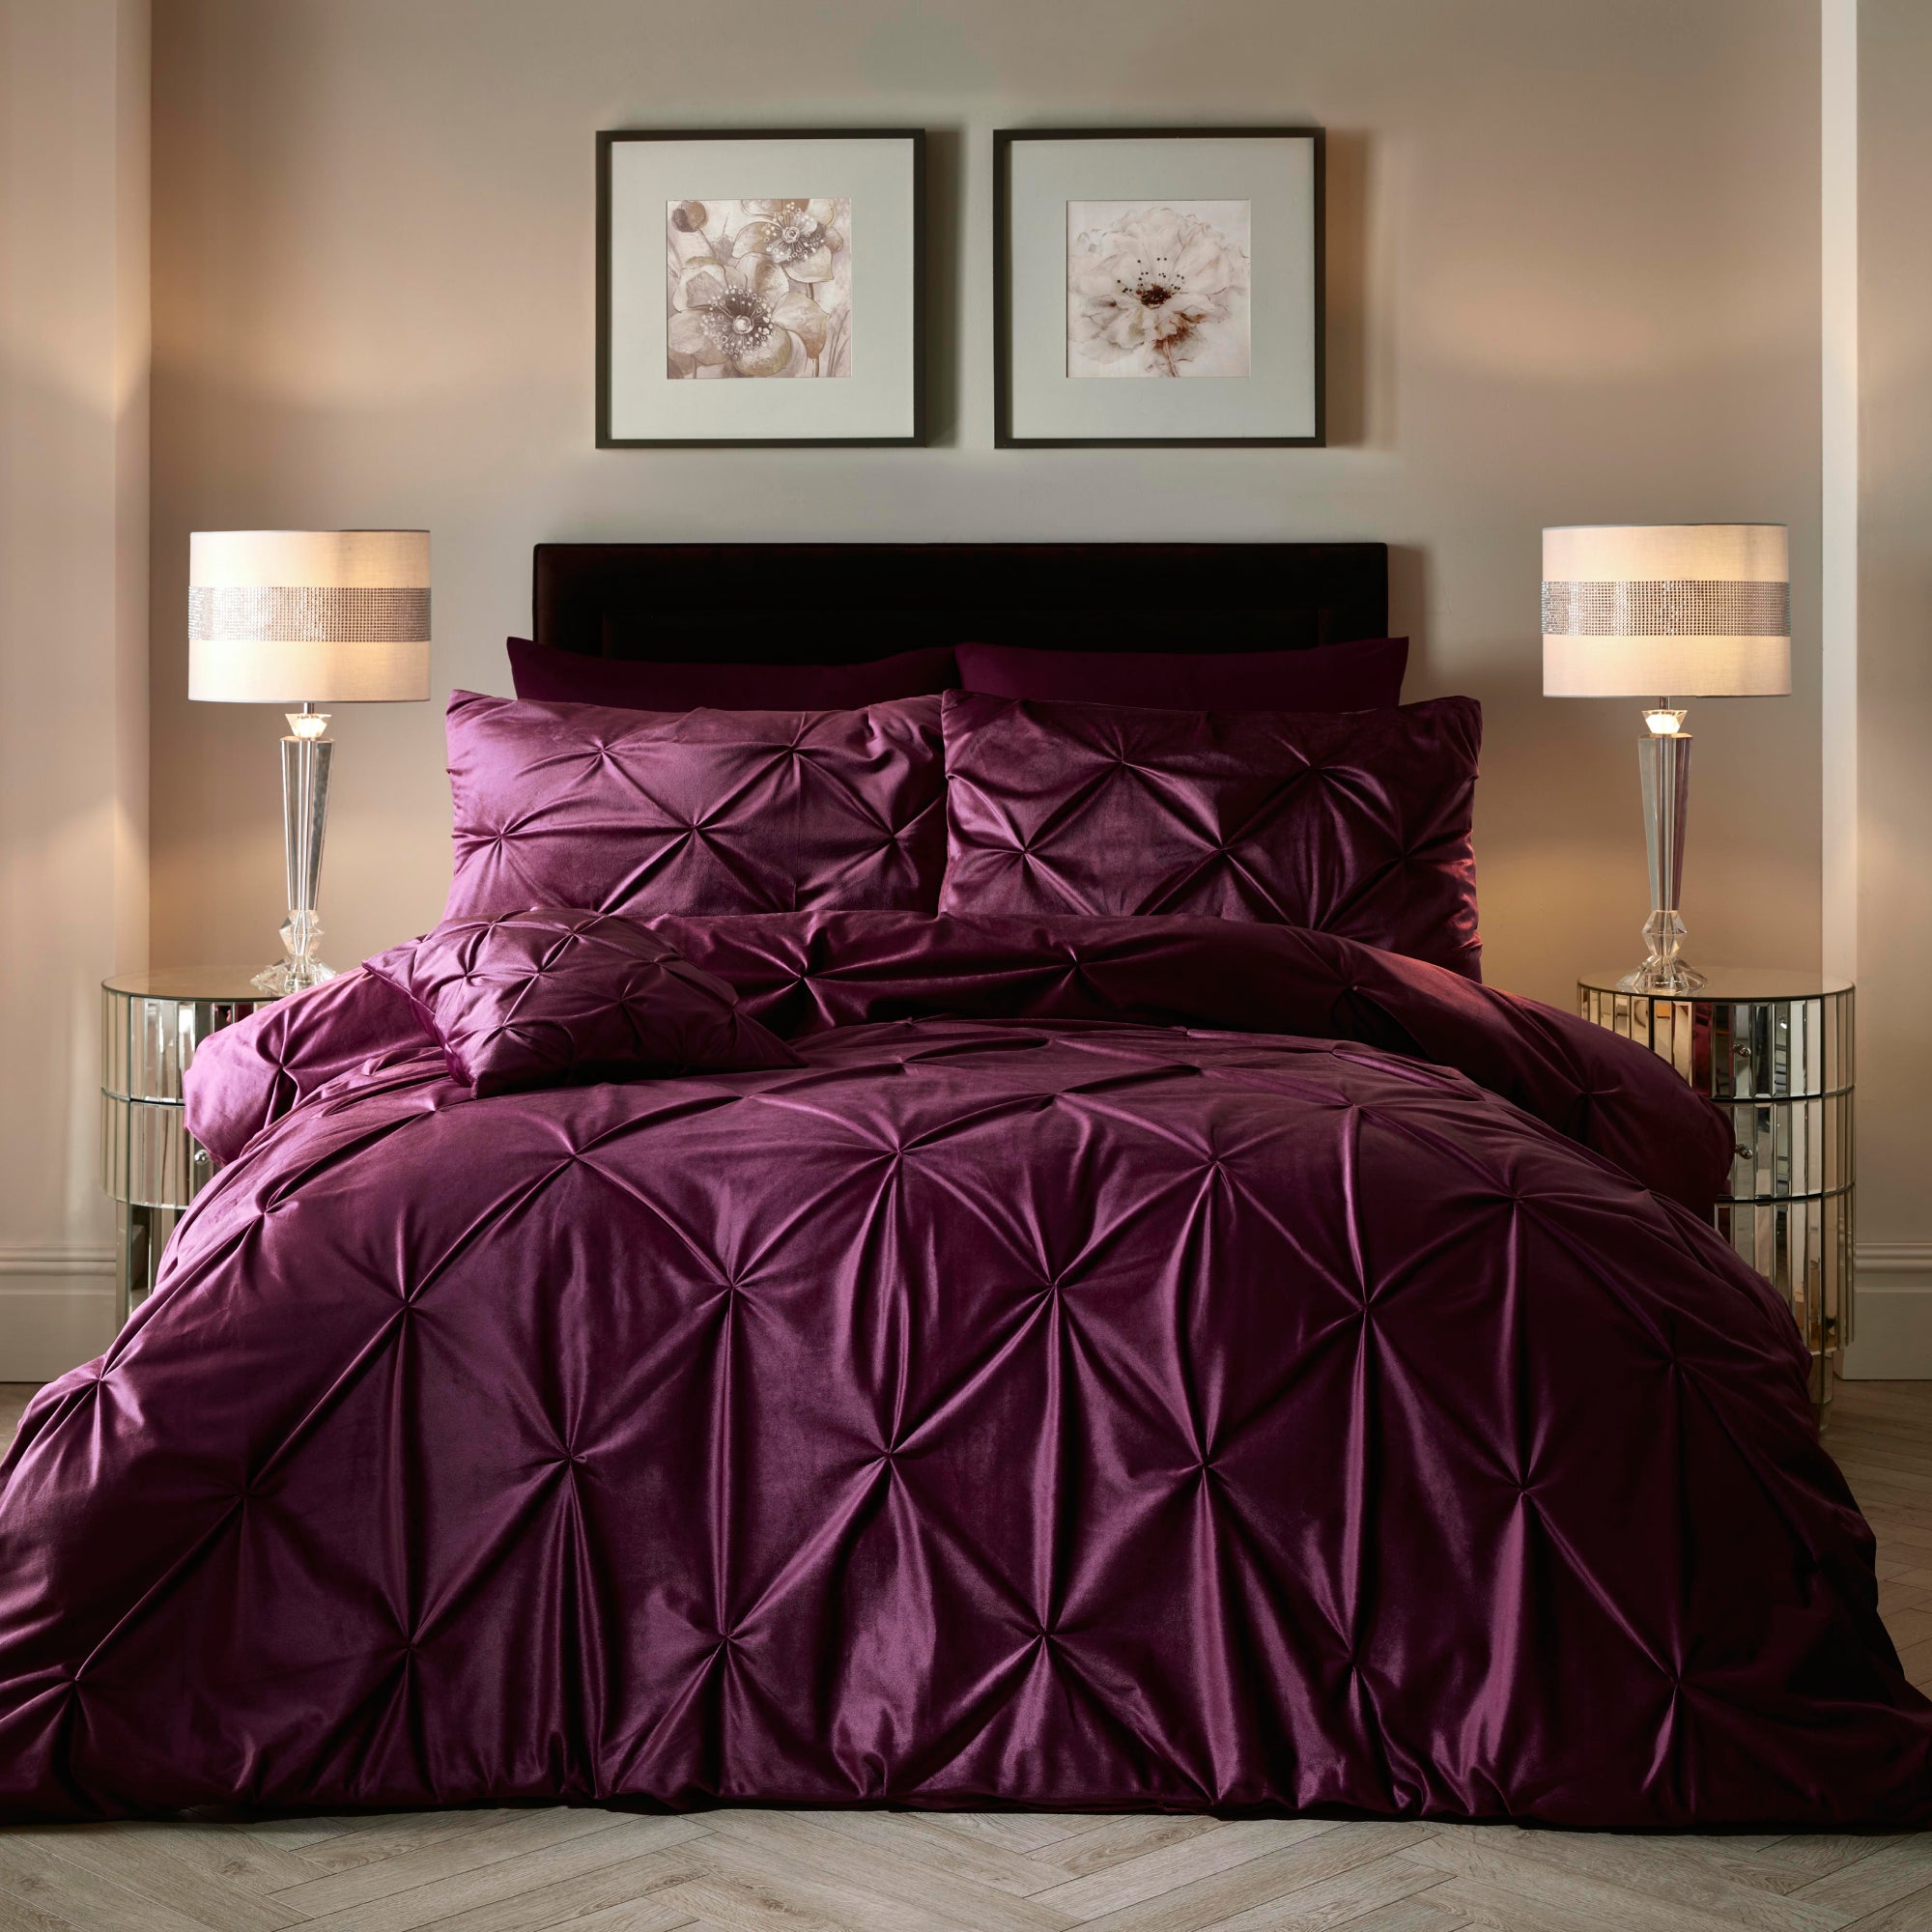 Soiree Mira Damson Duvet Cover And Pillowcase Set Damson Purple